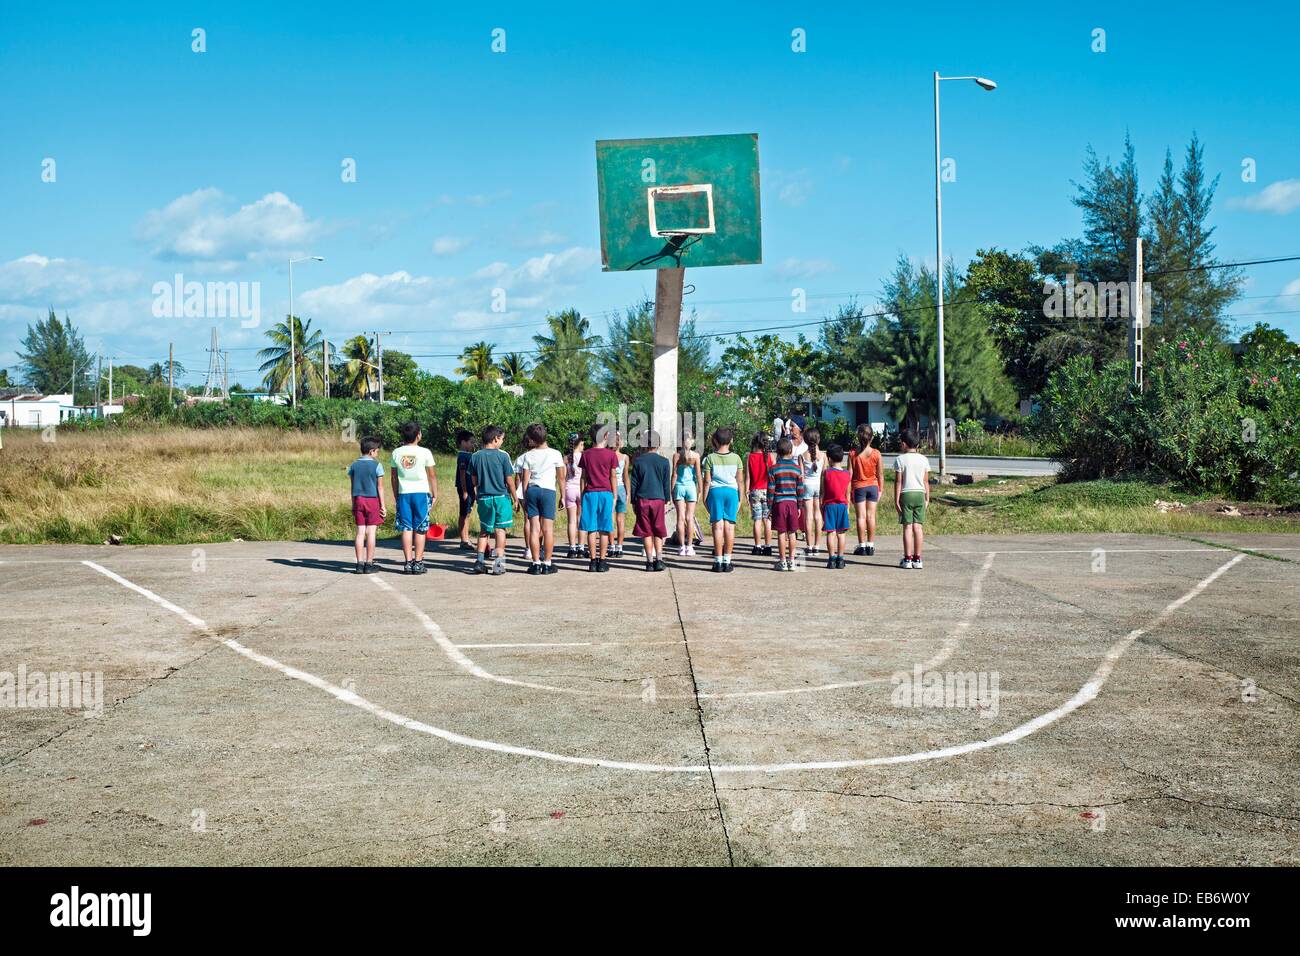 Children, Caibairien, Santa Clara province, Cuba. Stock Photo